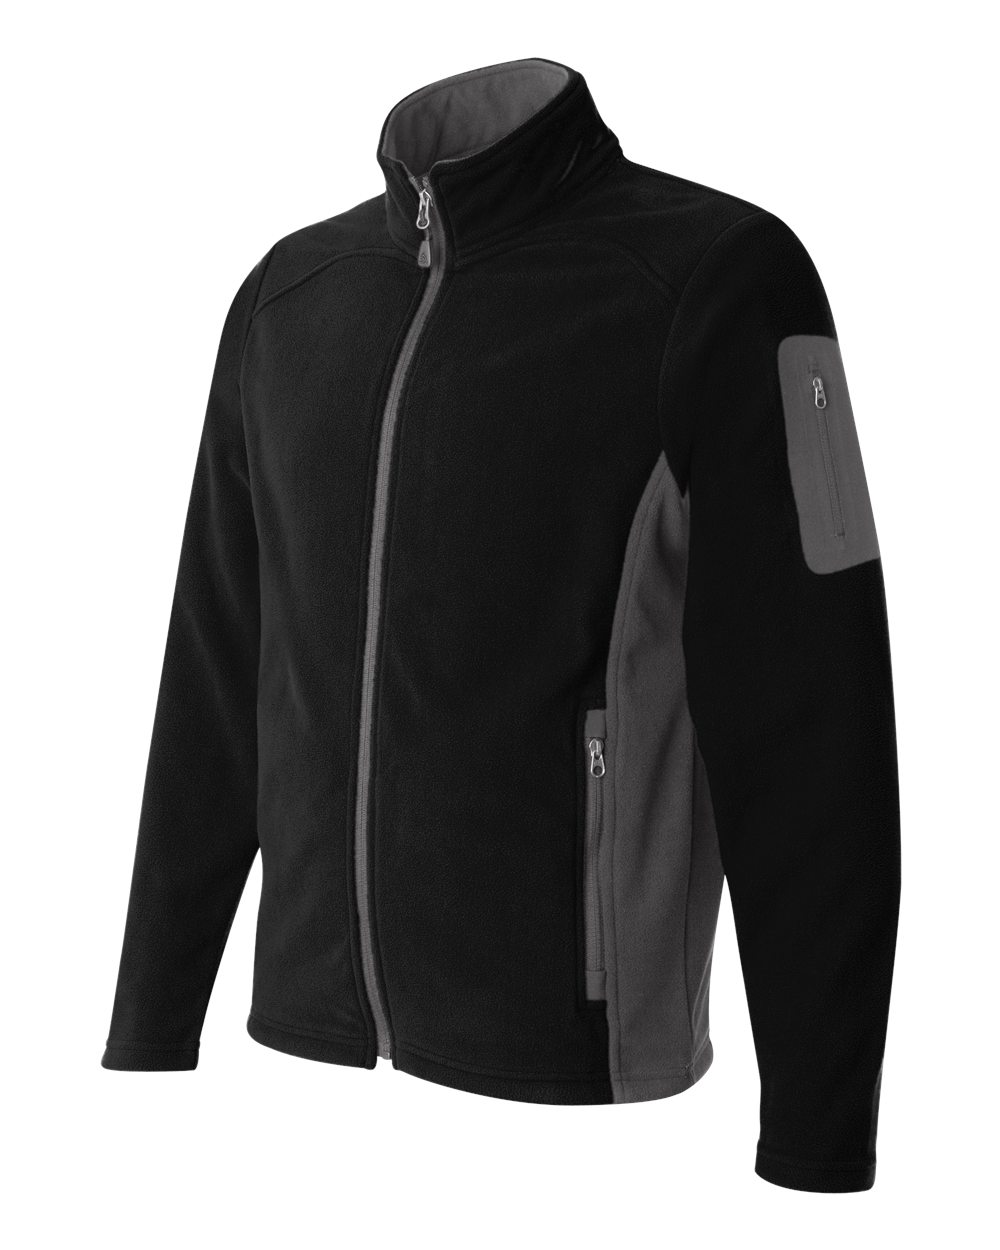 Colorado Clothing 5295 - Colorblocked Full-Zip Microfleece Jacket